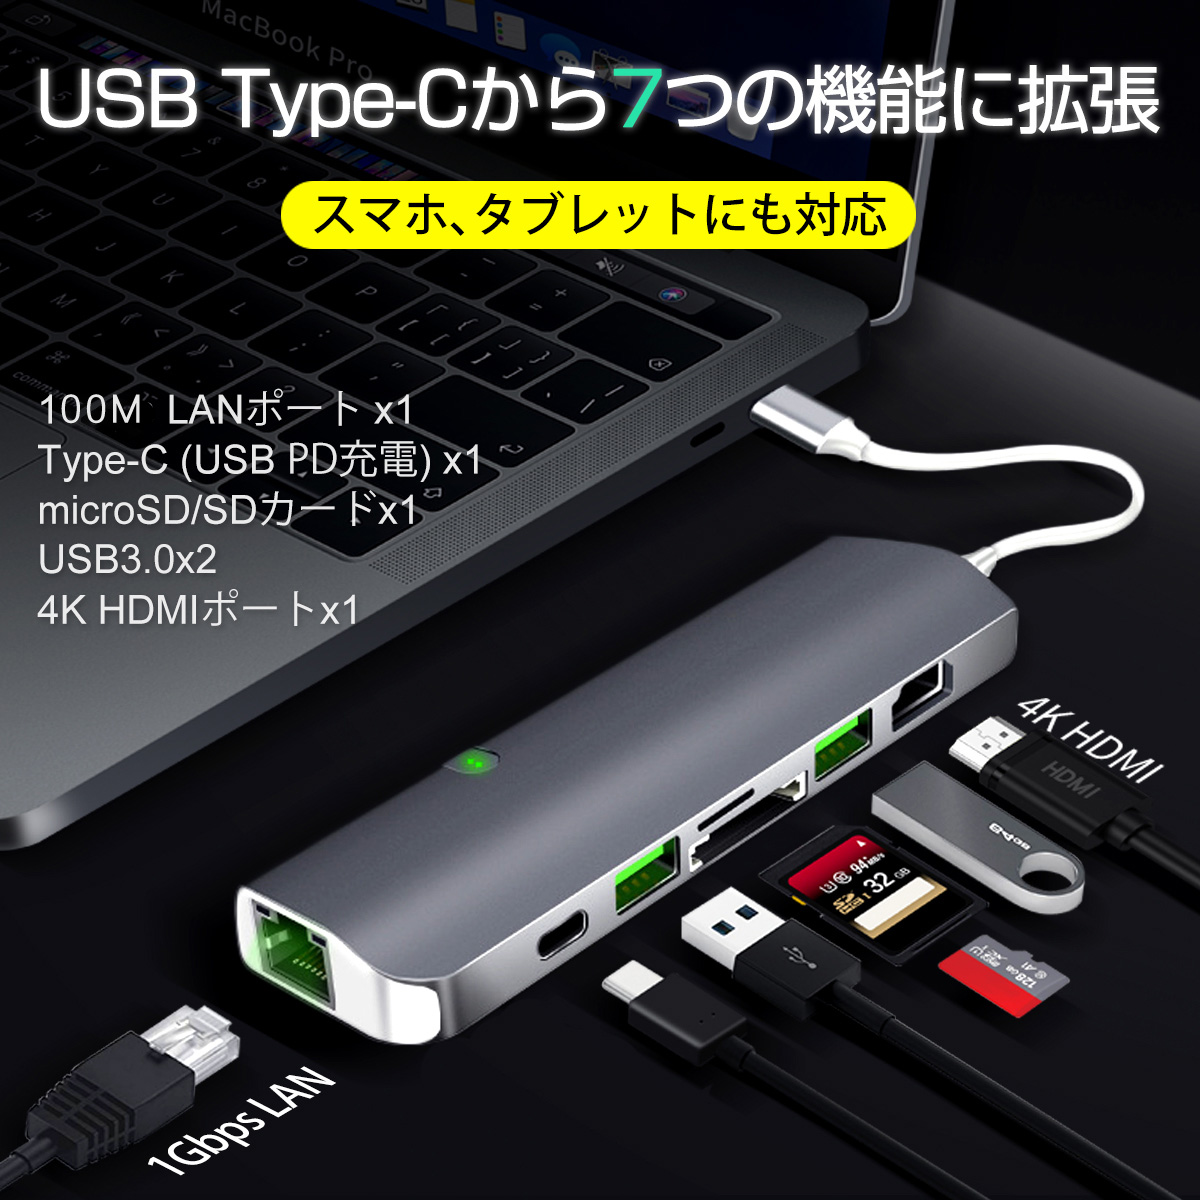 USB Type-C ハブ 7in1 USB3.0x2 4K HDMI 有線LAN PD充電 microSD SDスロット 拡張 変換 スペースグレイ 軽量 Galaxy MacBook ChromeBook VAIO Mac Windows対応 3ヶ月保証